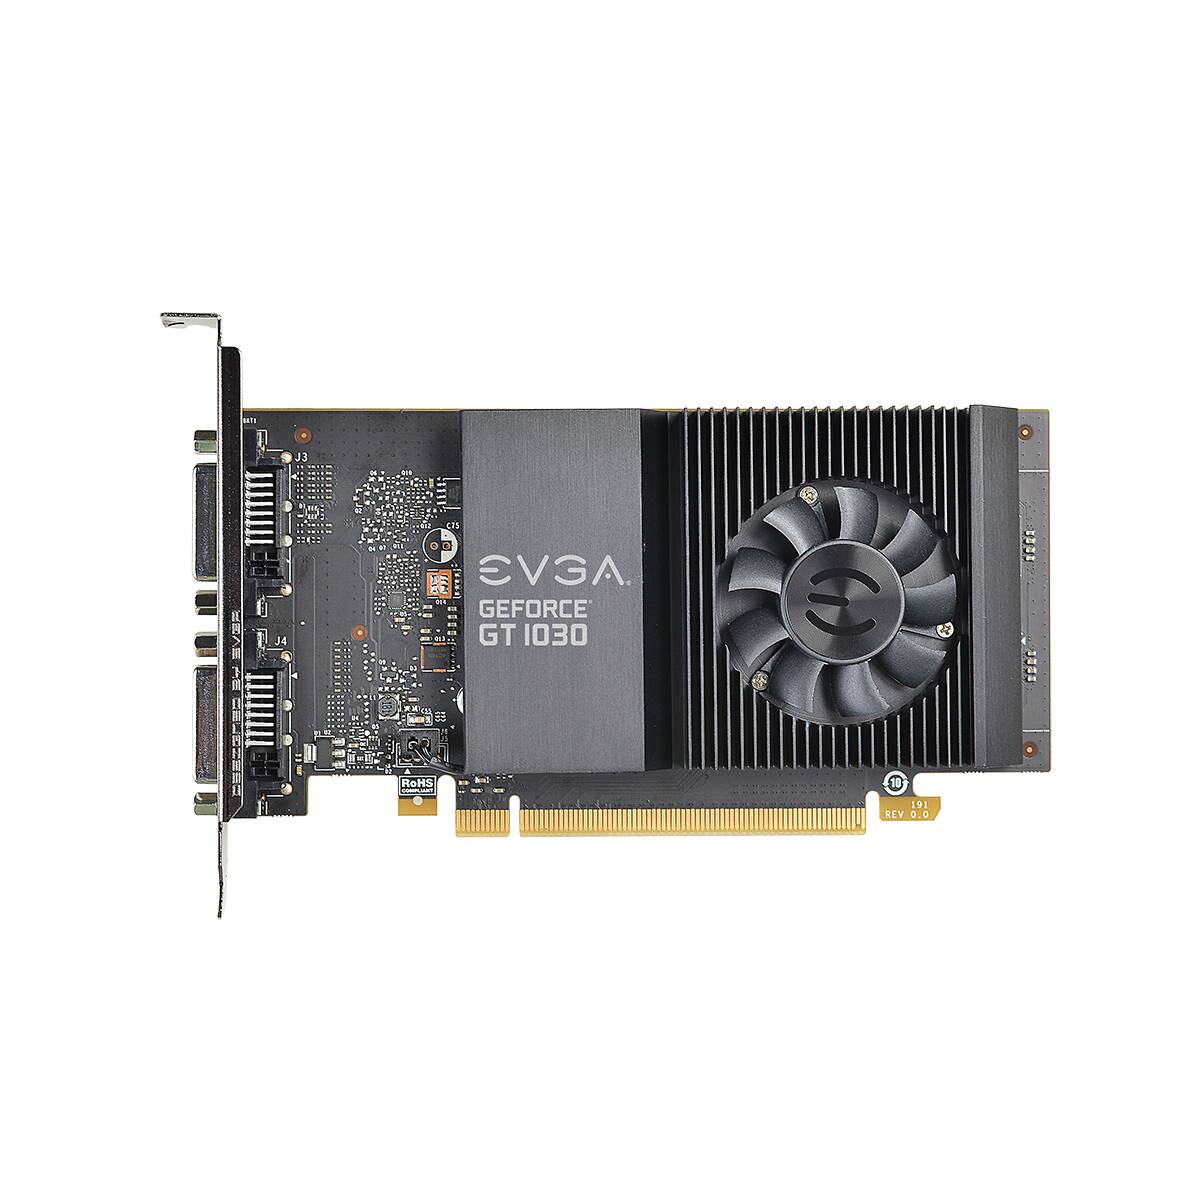 EVGA - Articles - EVGA GeForce GT 1030